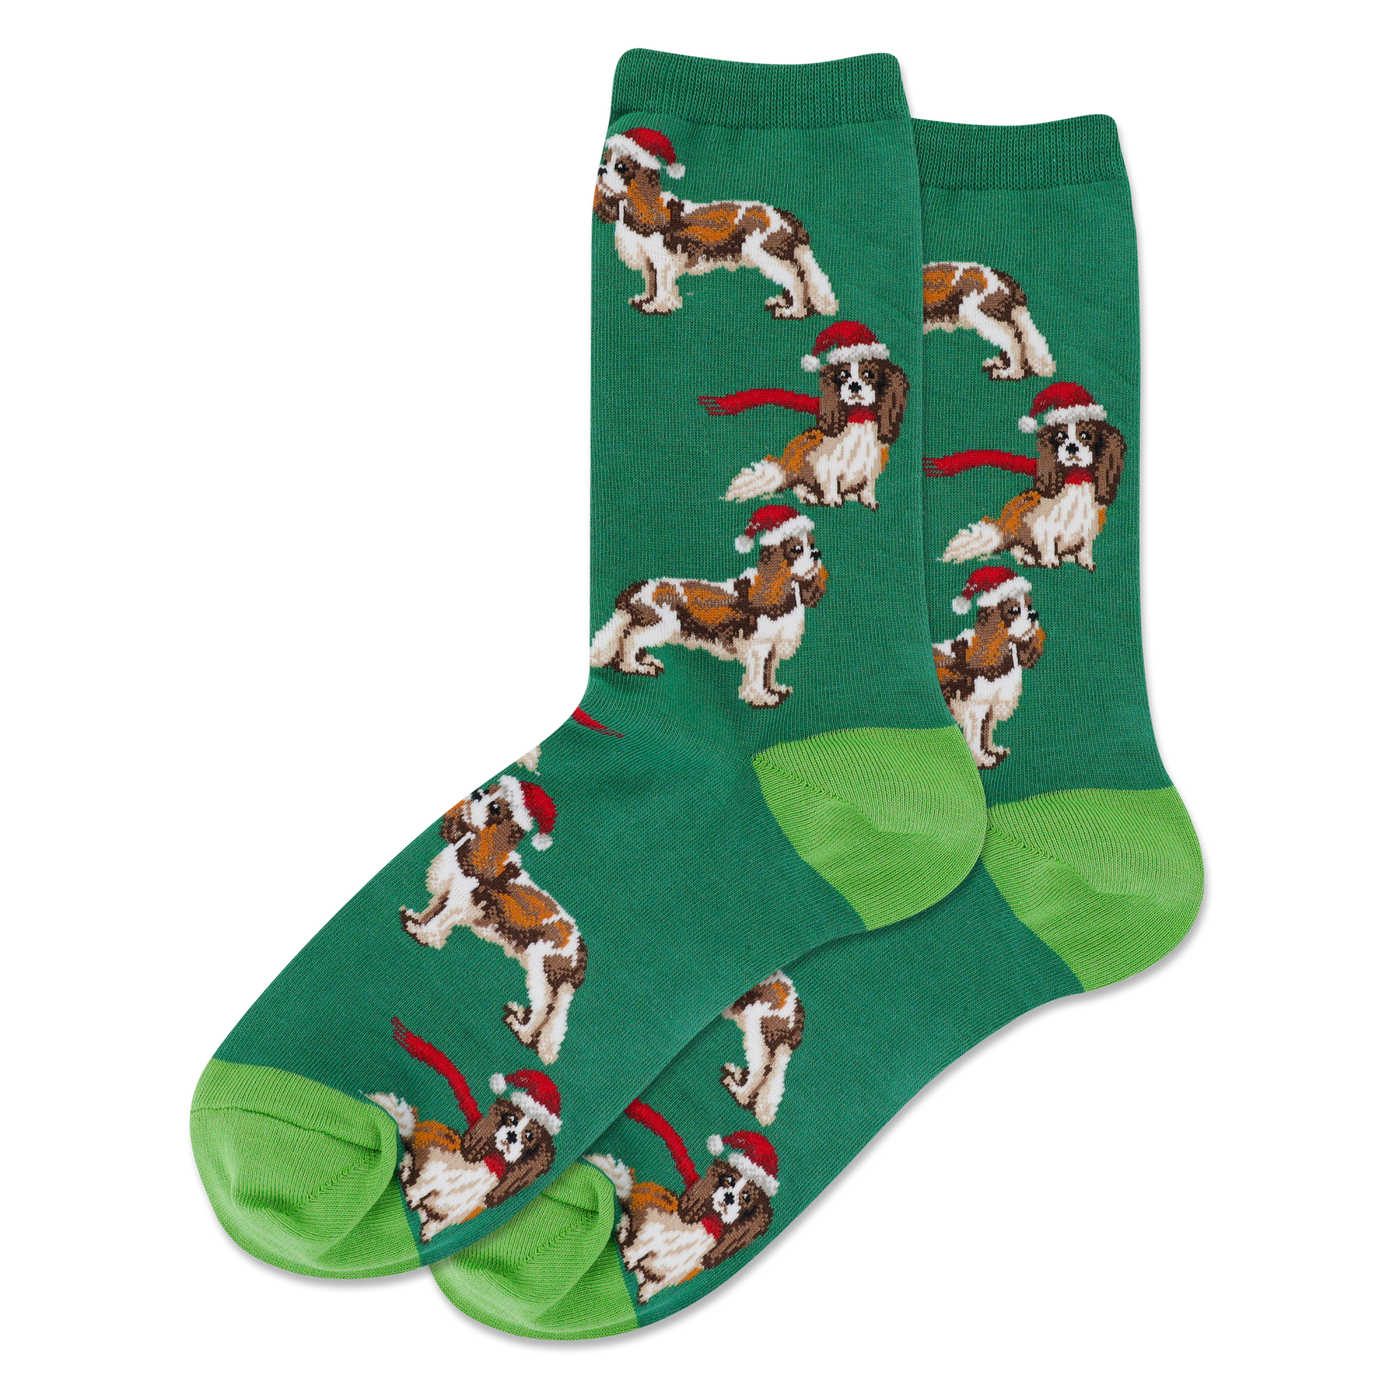 "Santa Dogs" Cotton Crew Socks by Hot Sox - Medium